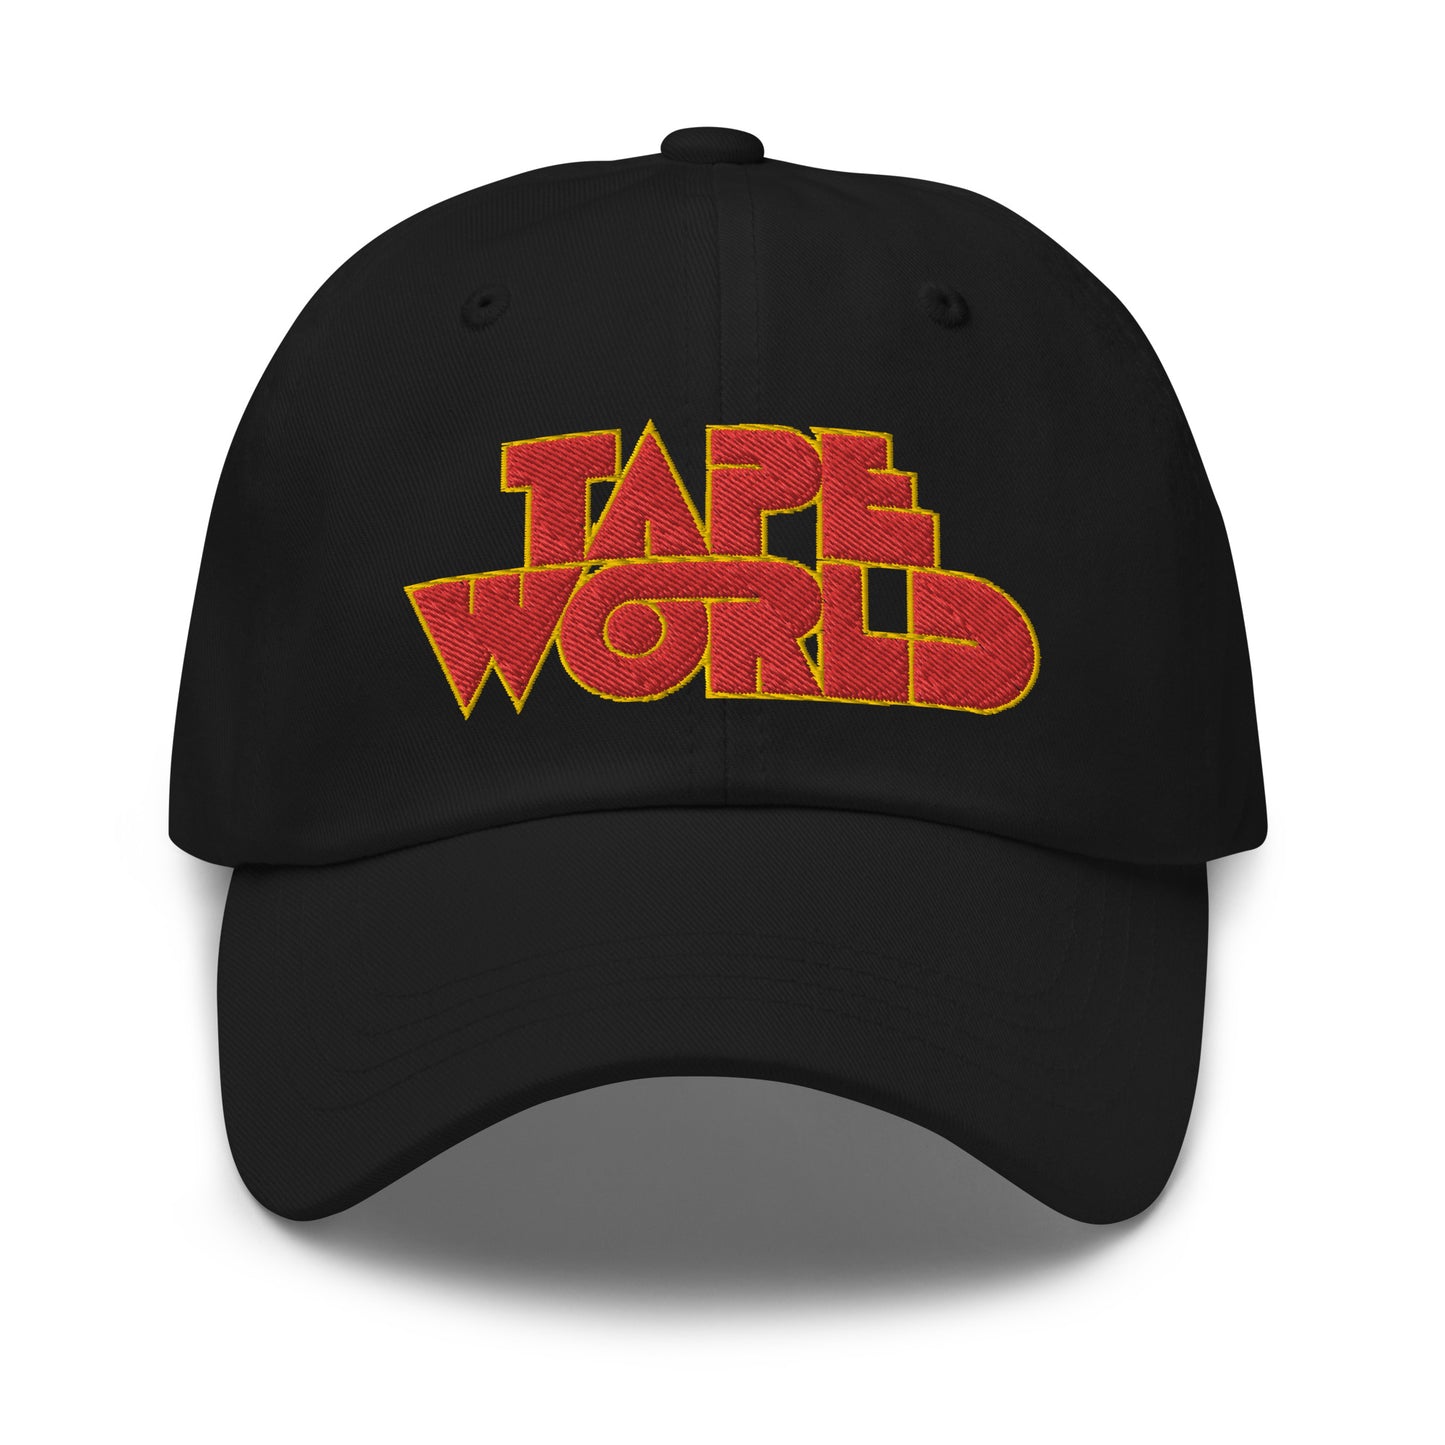 Tape World Dad hat